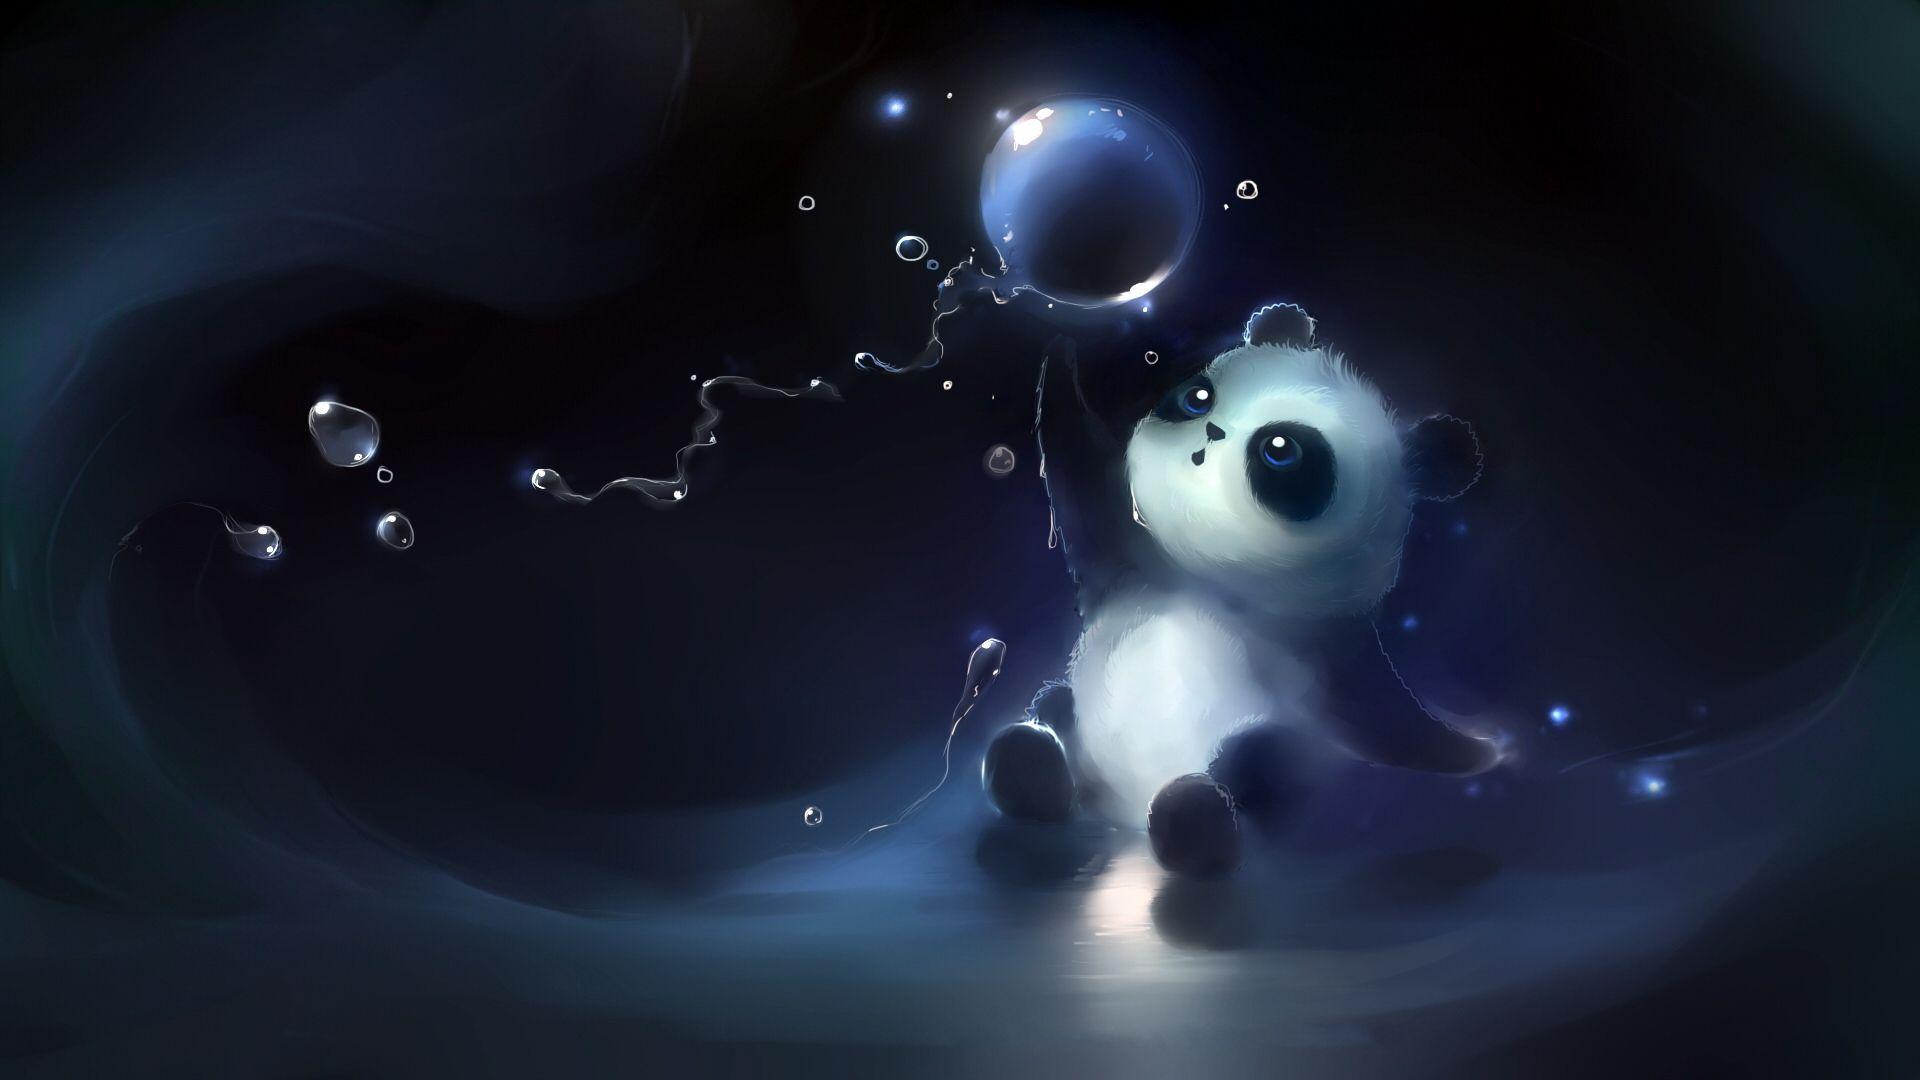 Wallpaper For > Cute Baby Panda Cartoon Wallpaper